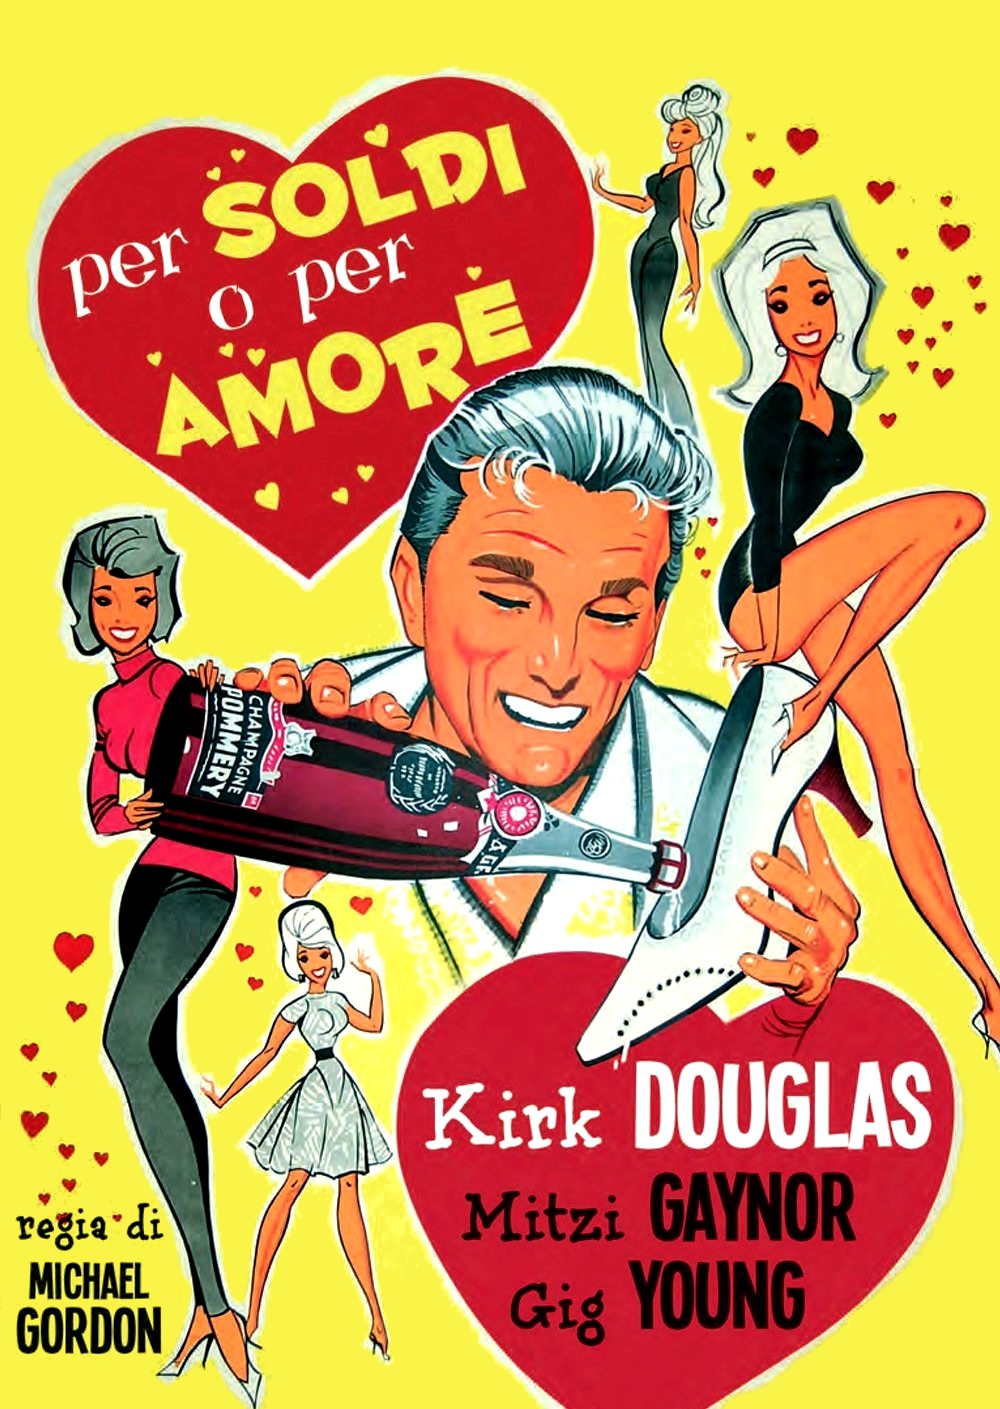 Per soldi o per amore (1963)